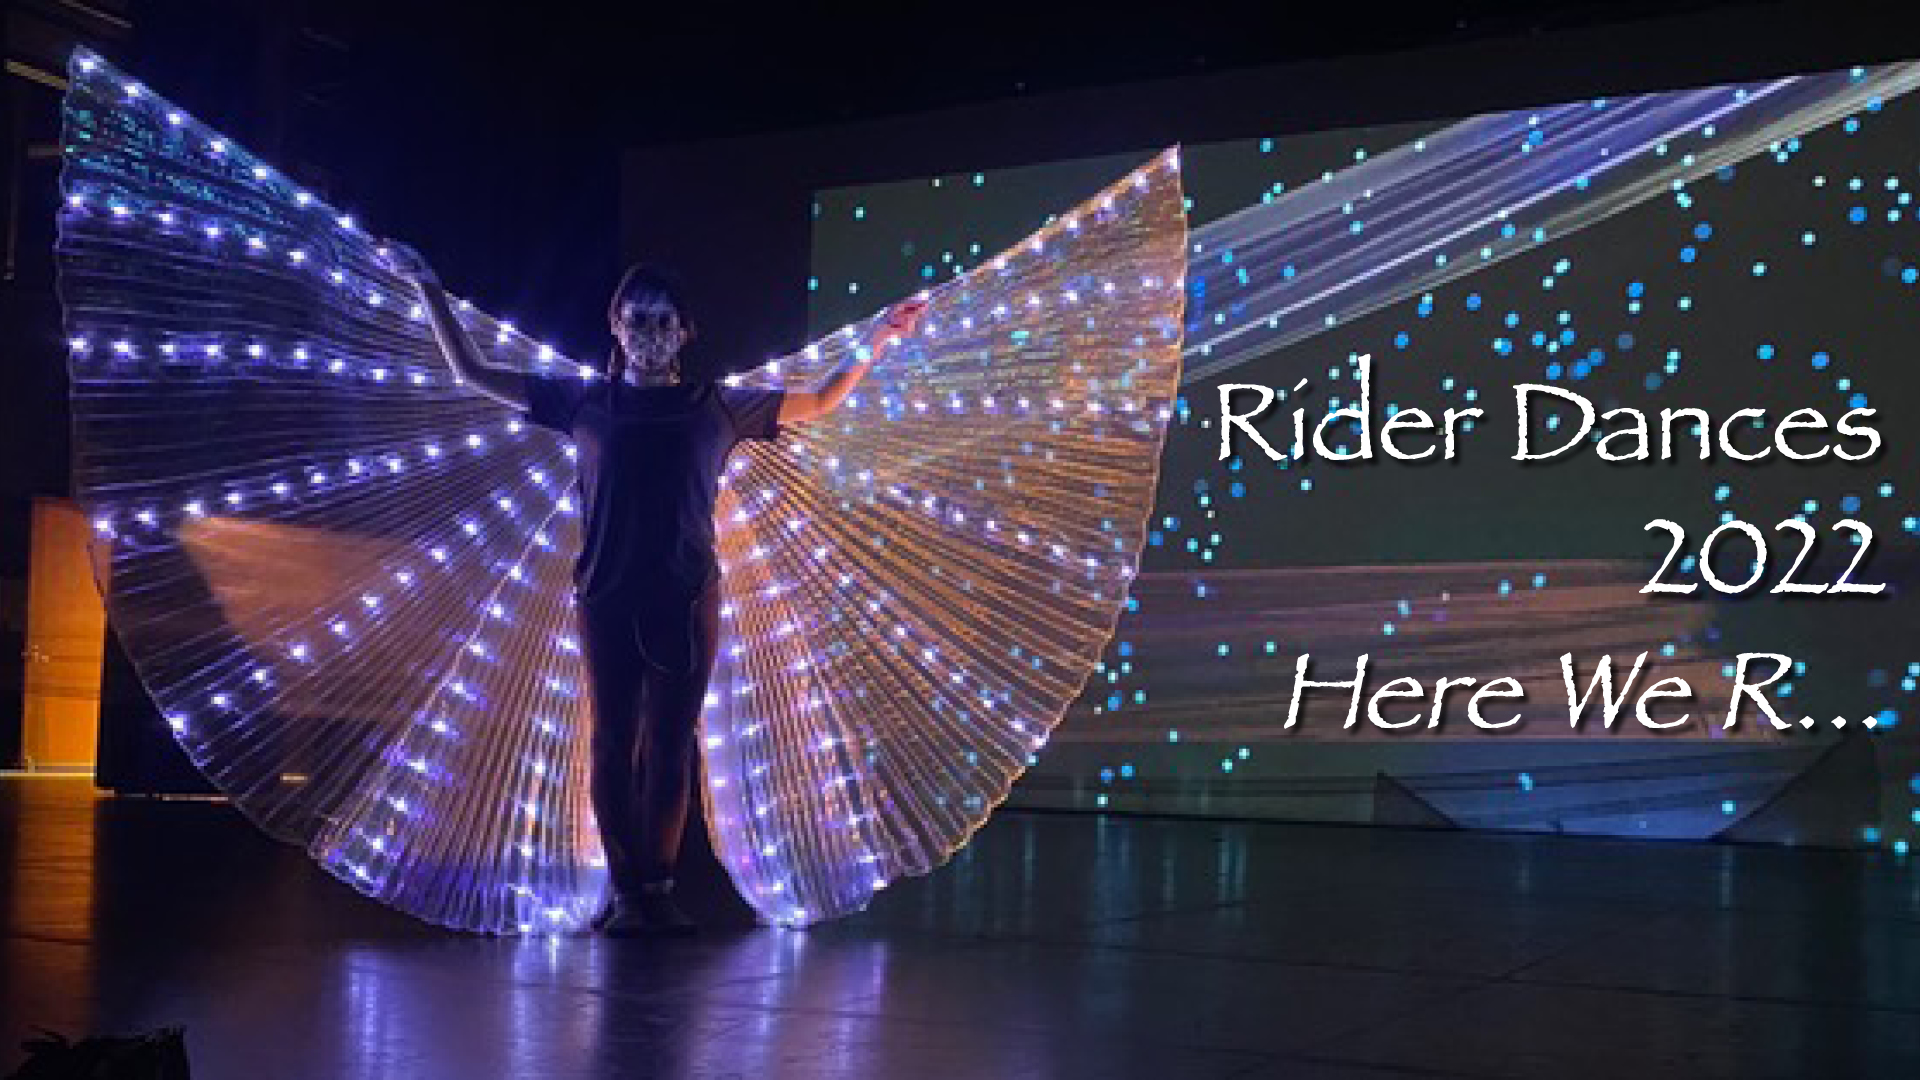 "Rider Dances 2022 - Here We R